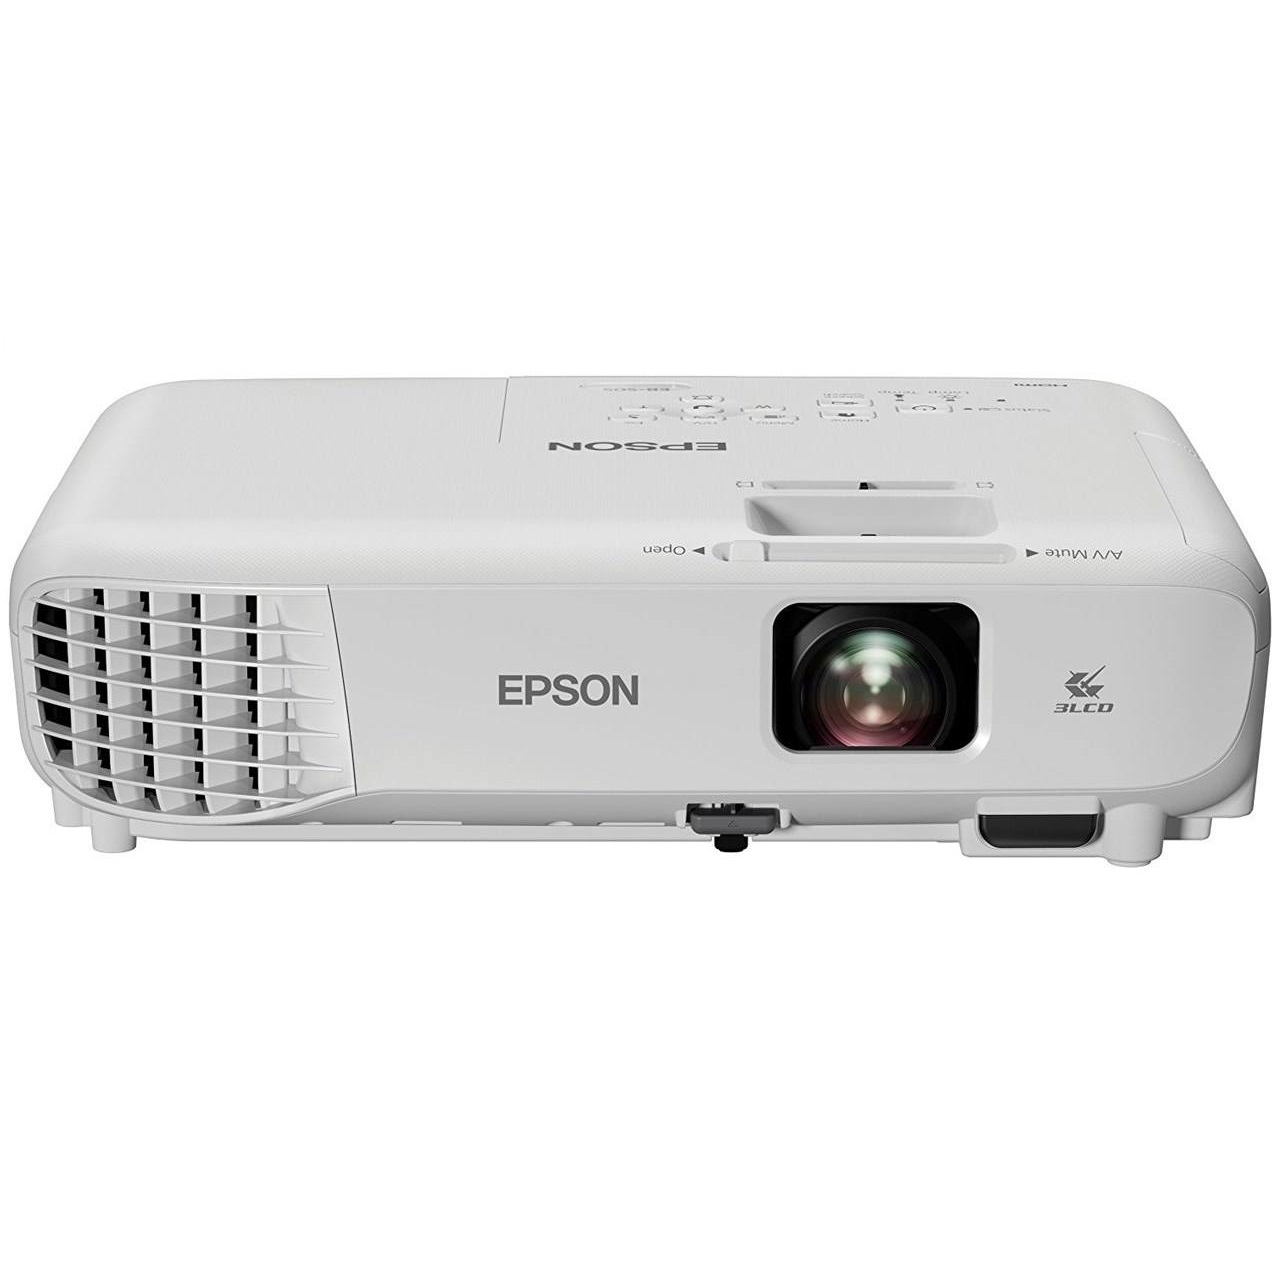 Epson EB-S05 Projector